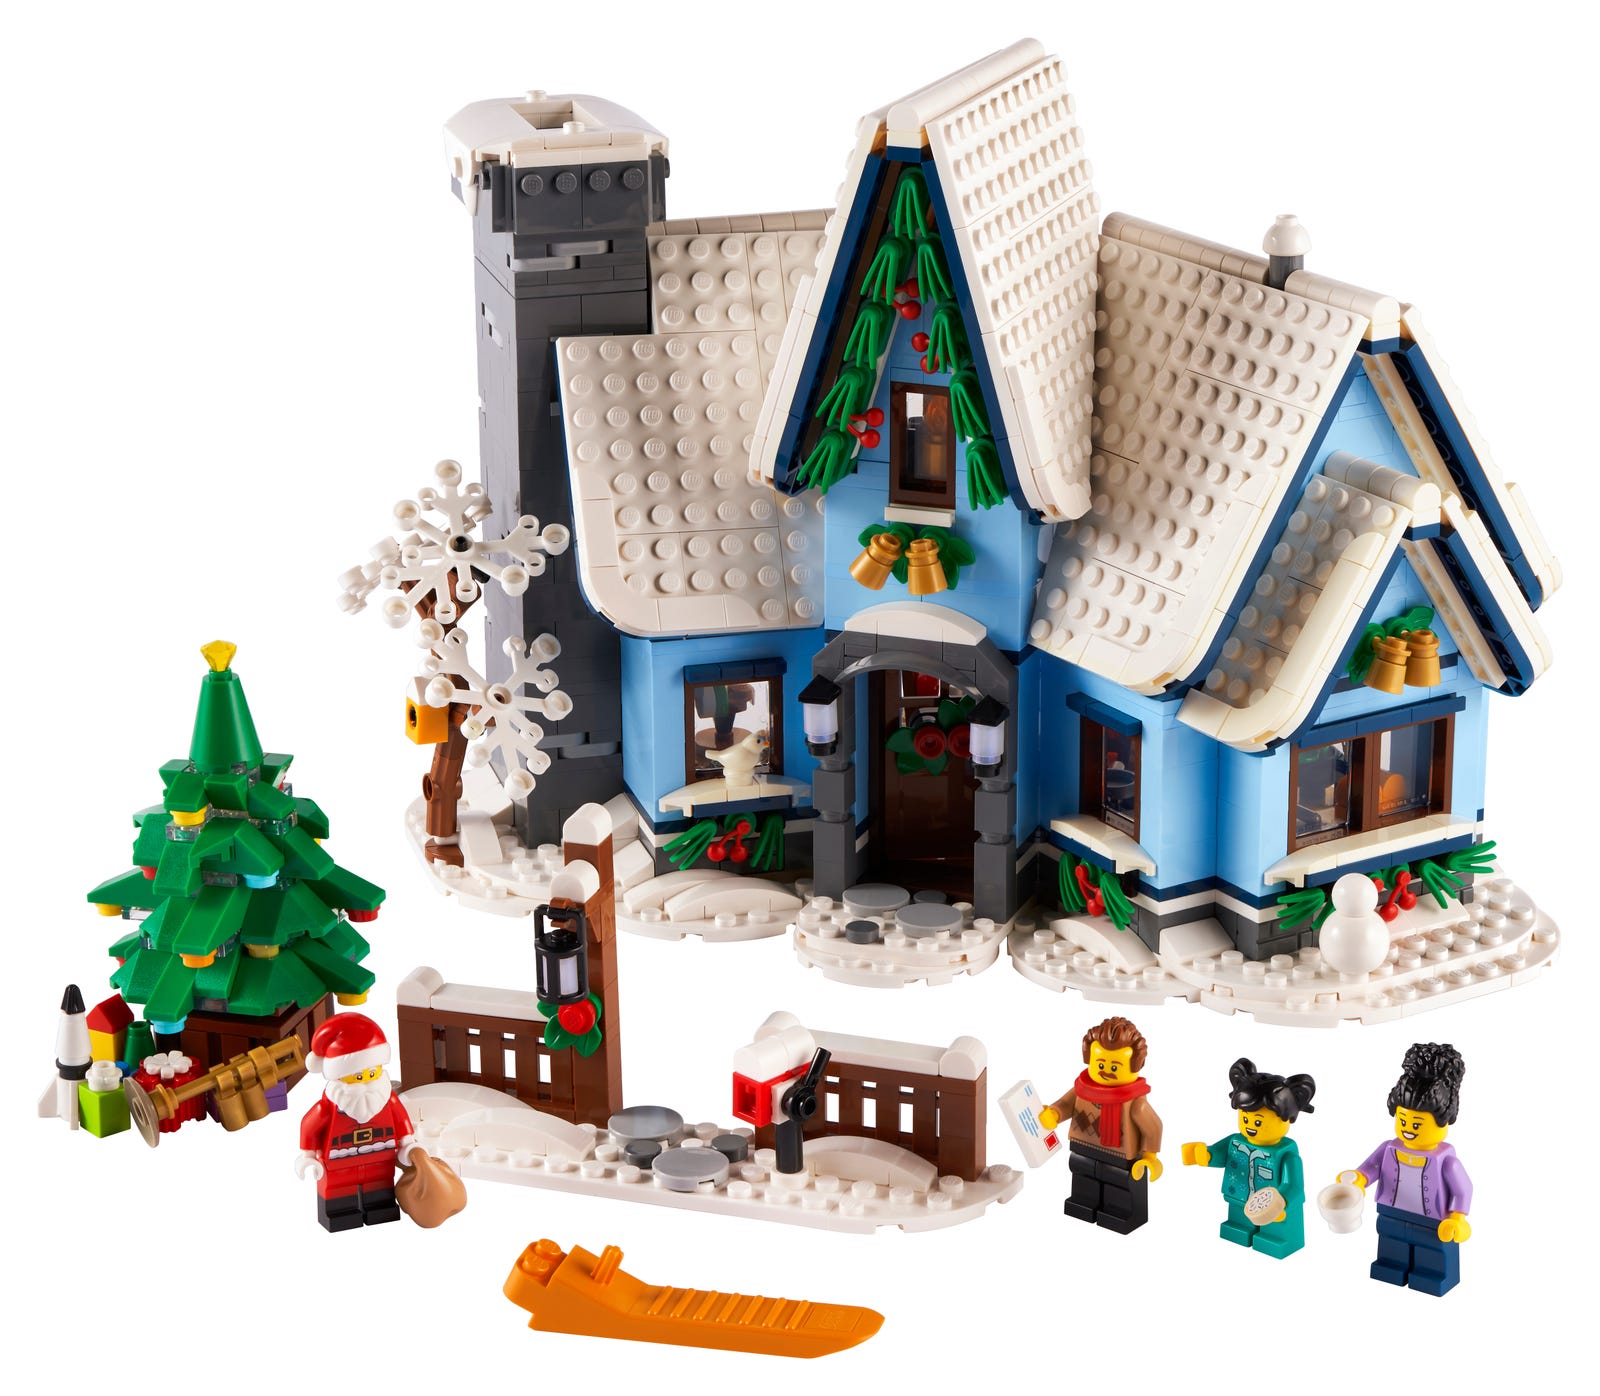 LEGO Santa Claus is visiting